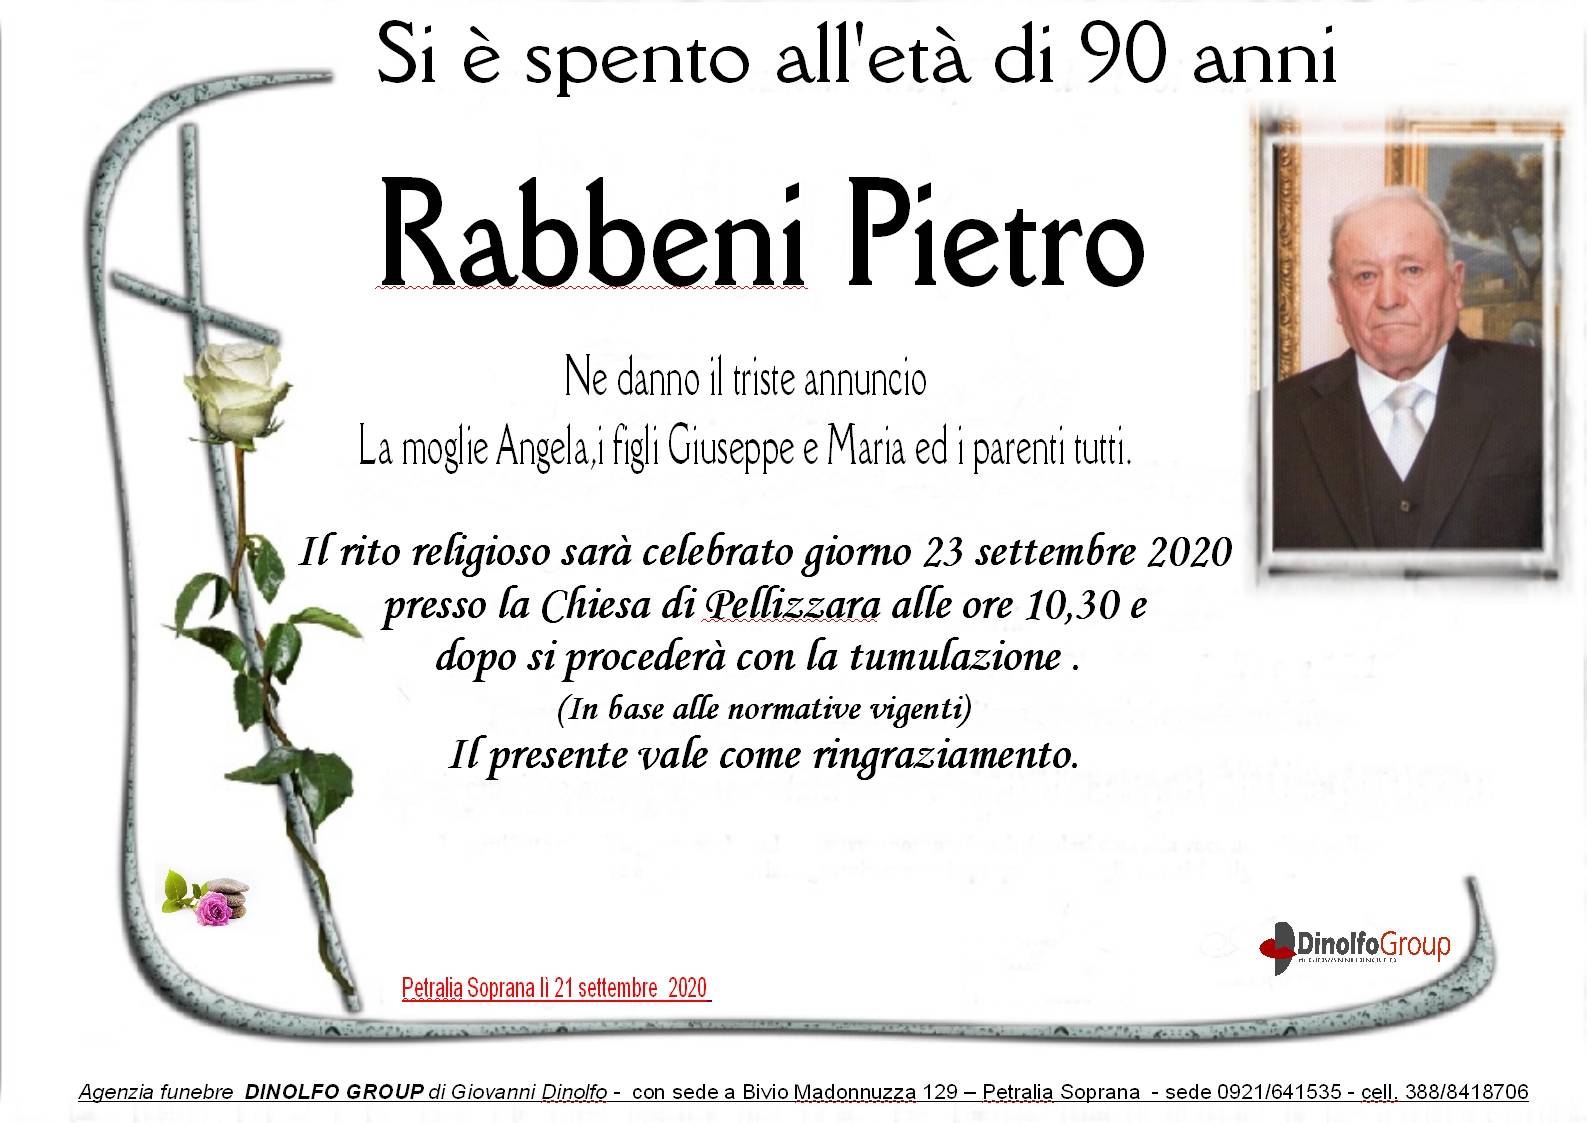 Pietro Rabbeni